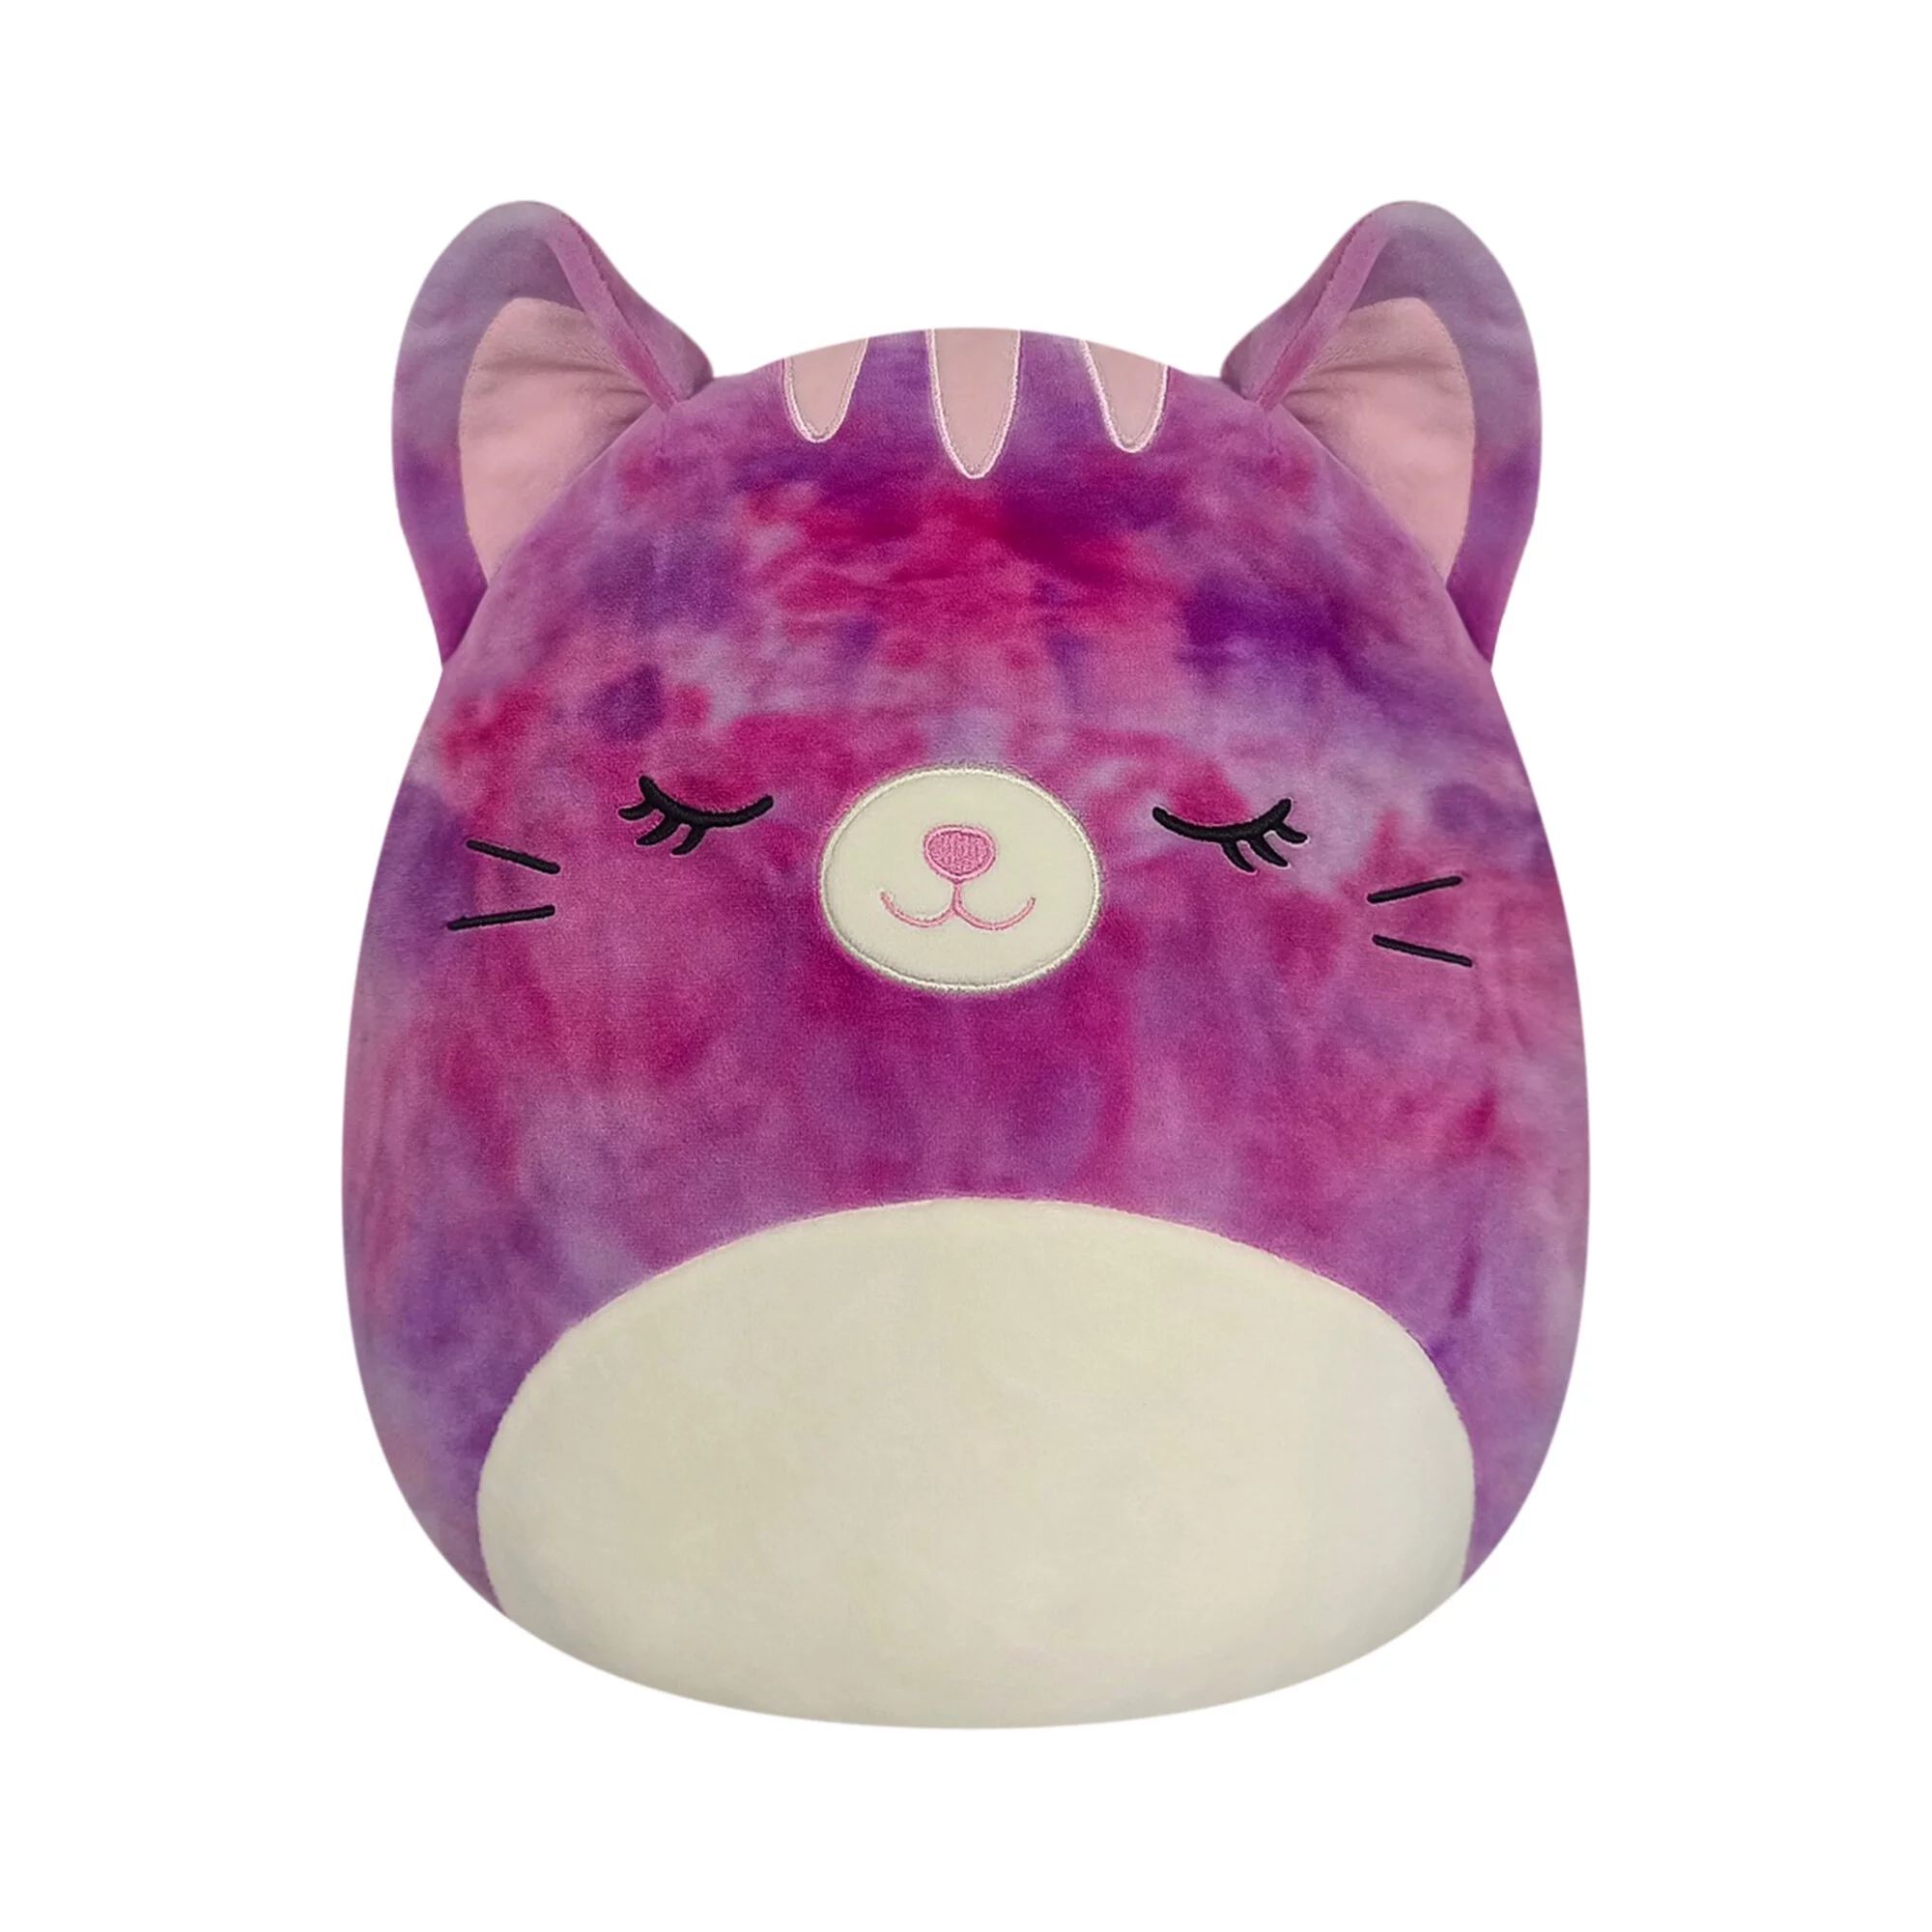 Squishmallows 14" Tie-Dye Pink Cat - Caeli, The Stuffed Animal Plush Toy | Walmart (US)